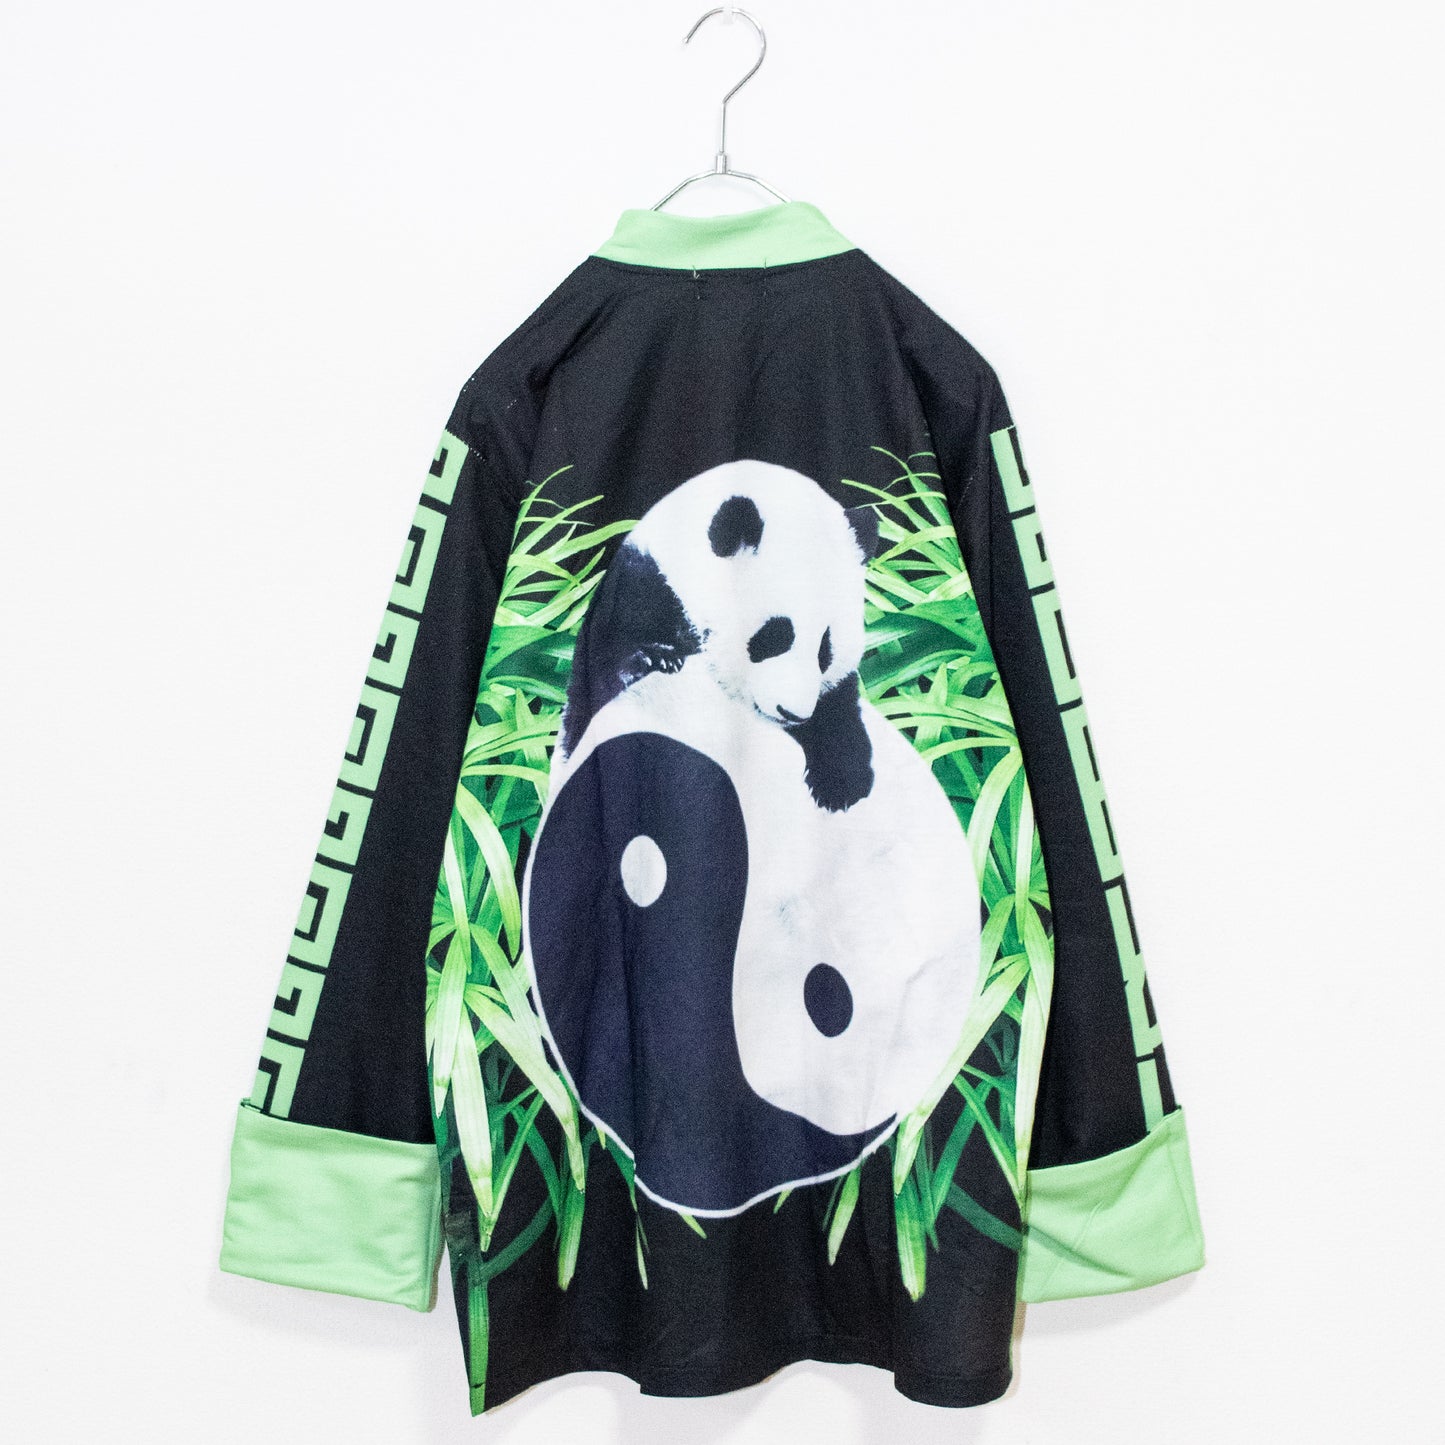 ACDC RAG Panda China L/S Shirt Jacket Black - YOUAREMYPOISON